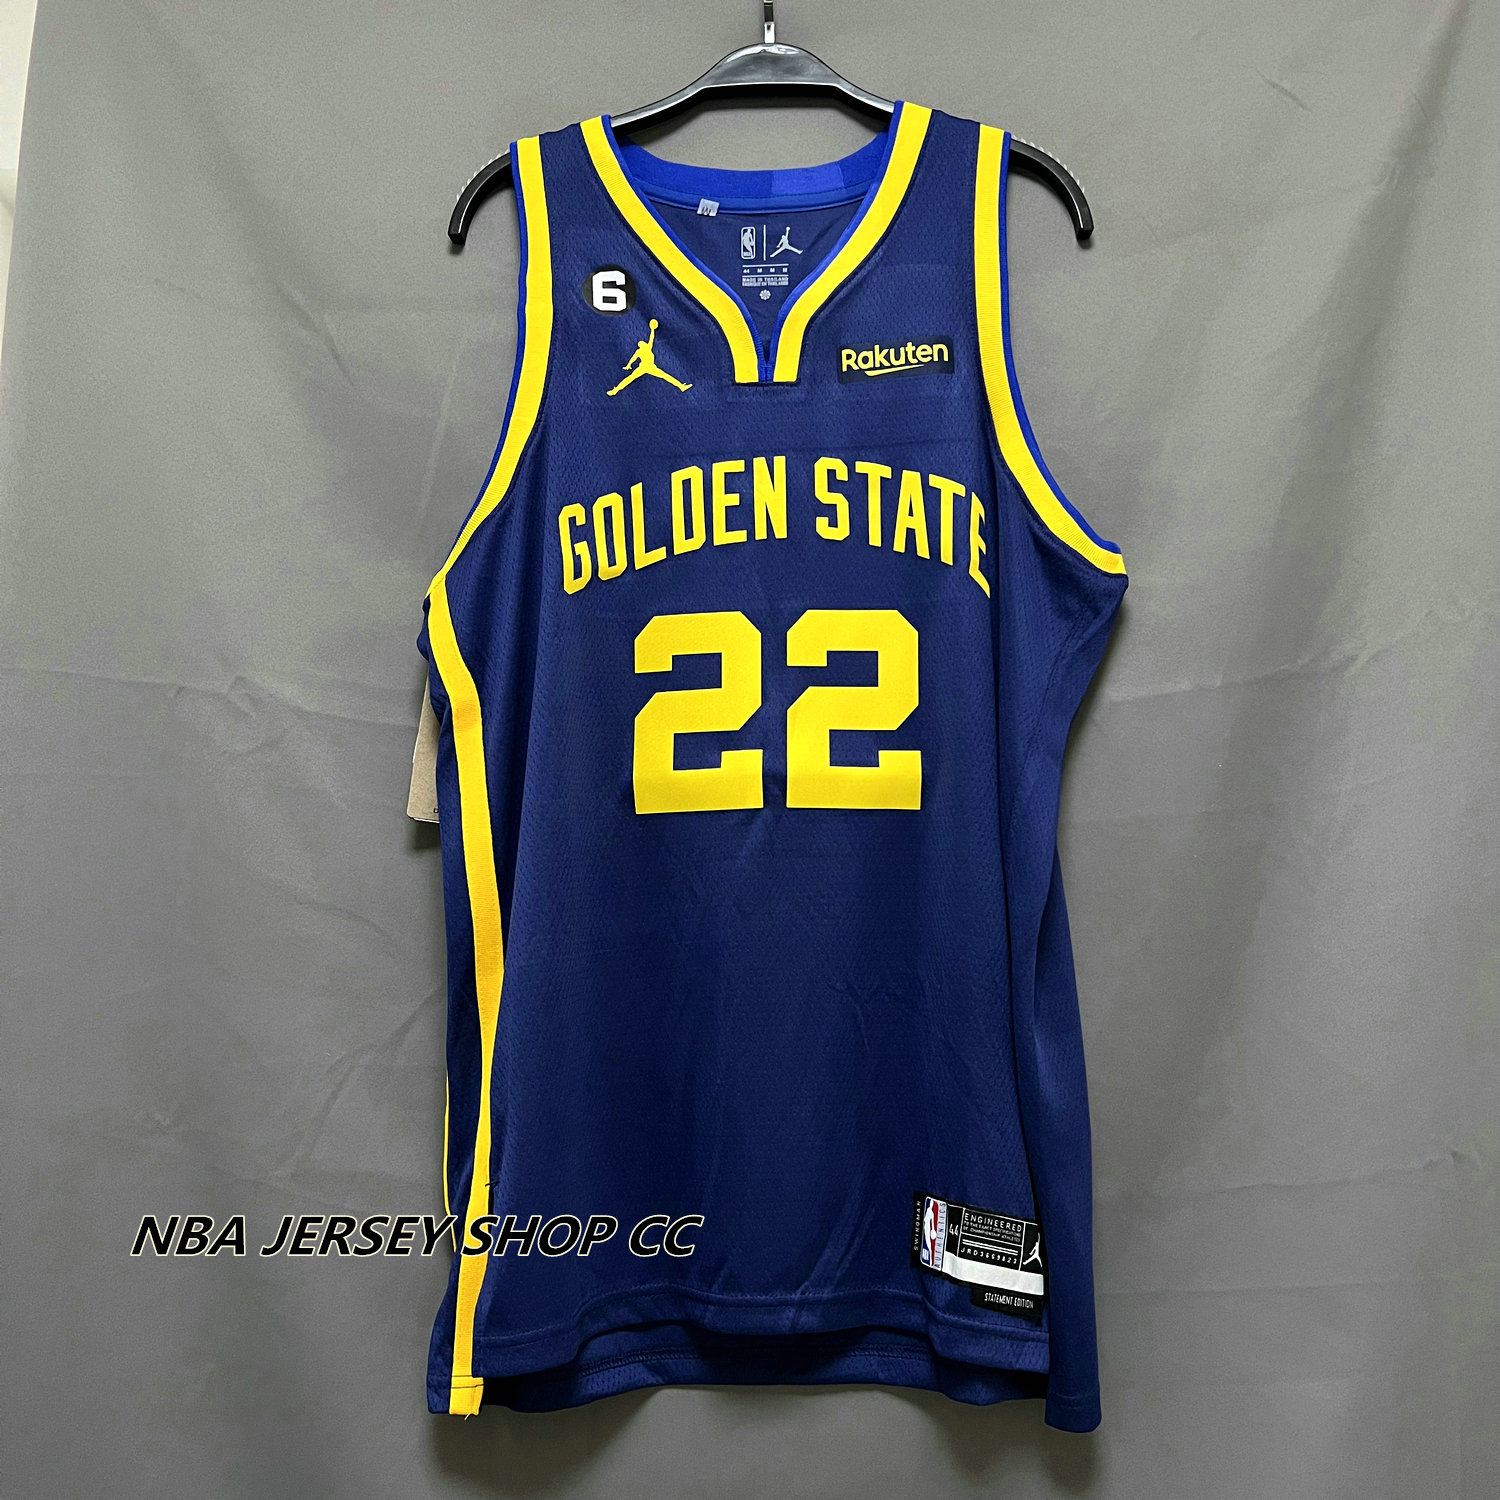 Golden State Warriors - 2022 Champions Short NBA Lanyard